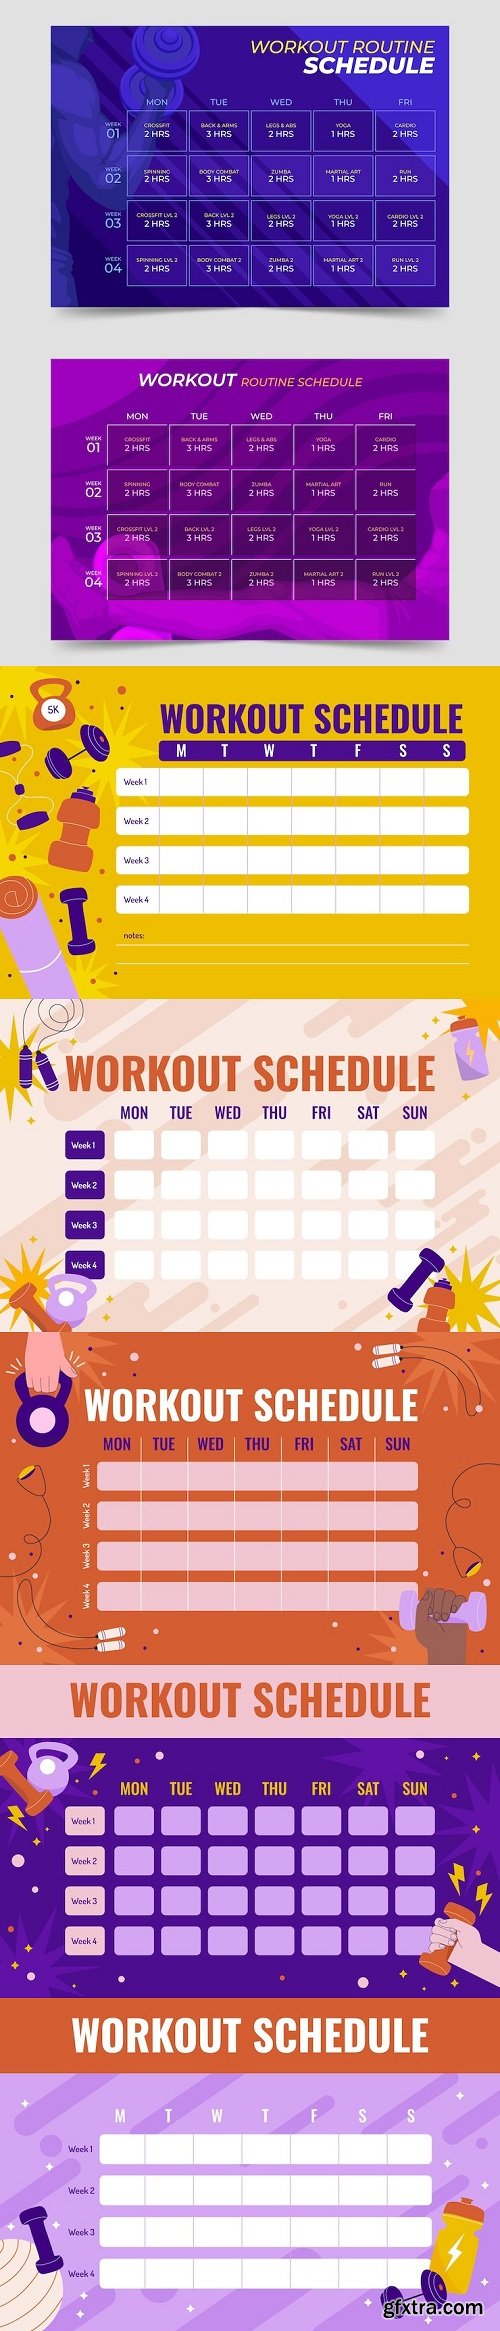 Hand drawn workout routine schedule template